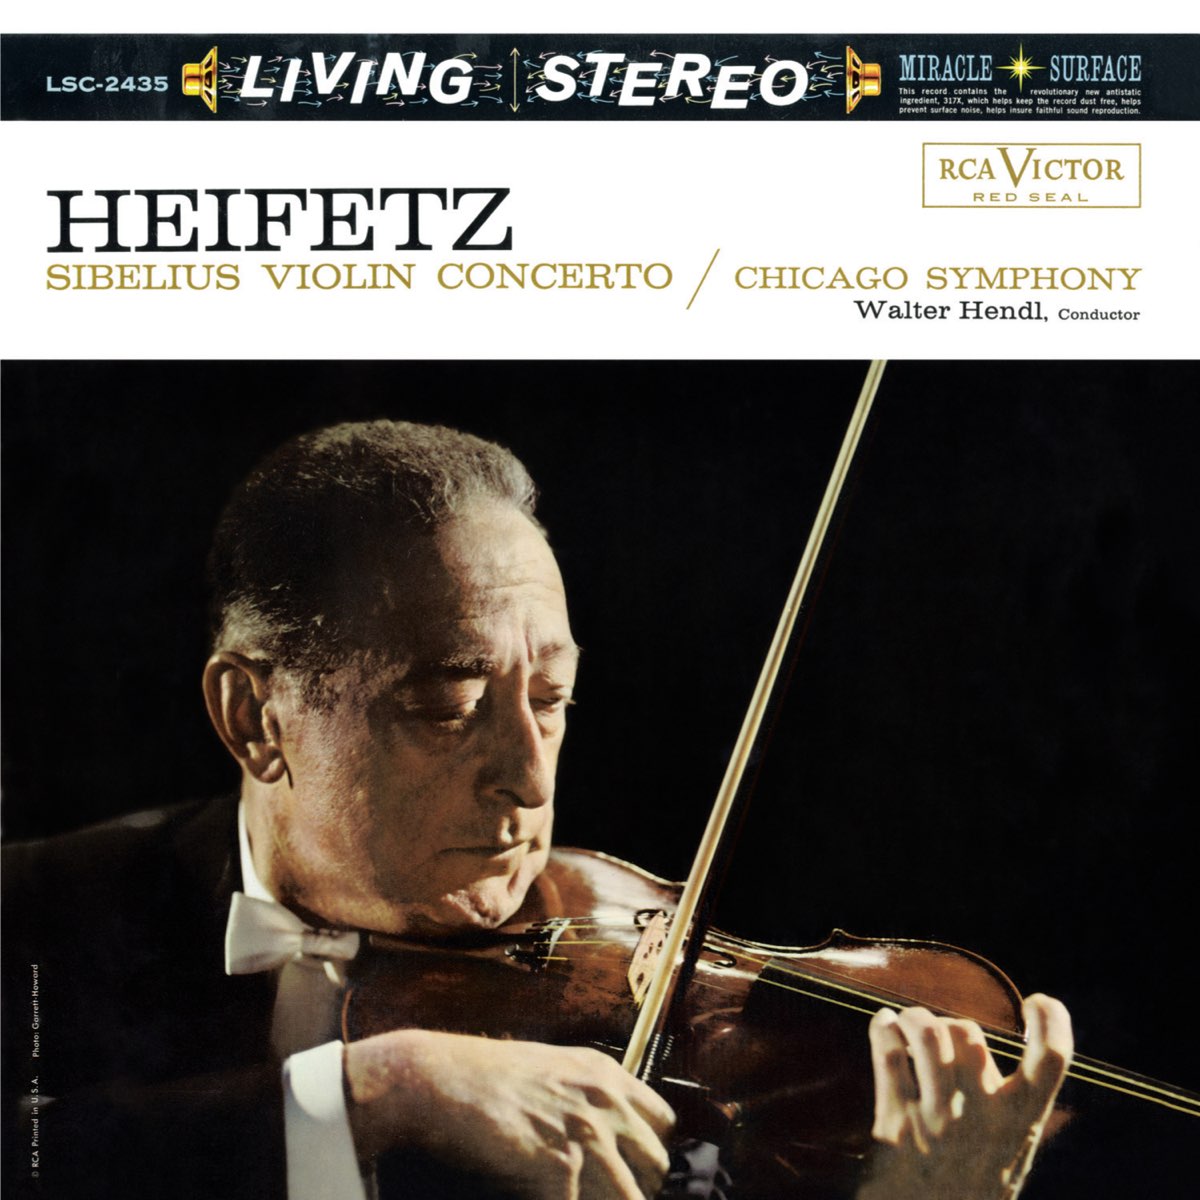 Sibelius: Violin Concerto in D Minor, Op. 47 - EP - Album by Jascha  Heifetz, Chicago Symphony Orchestra & Walter Hendl - Apple Music